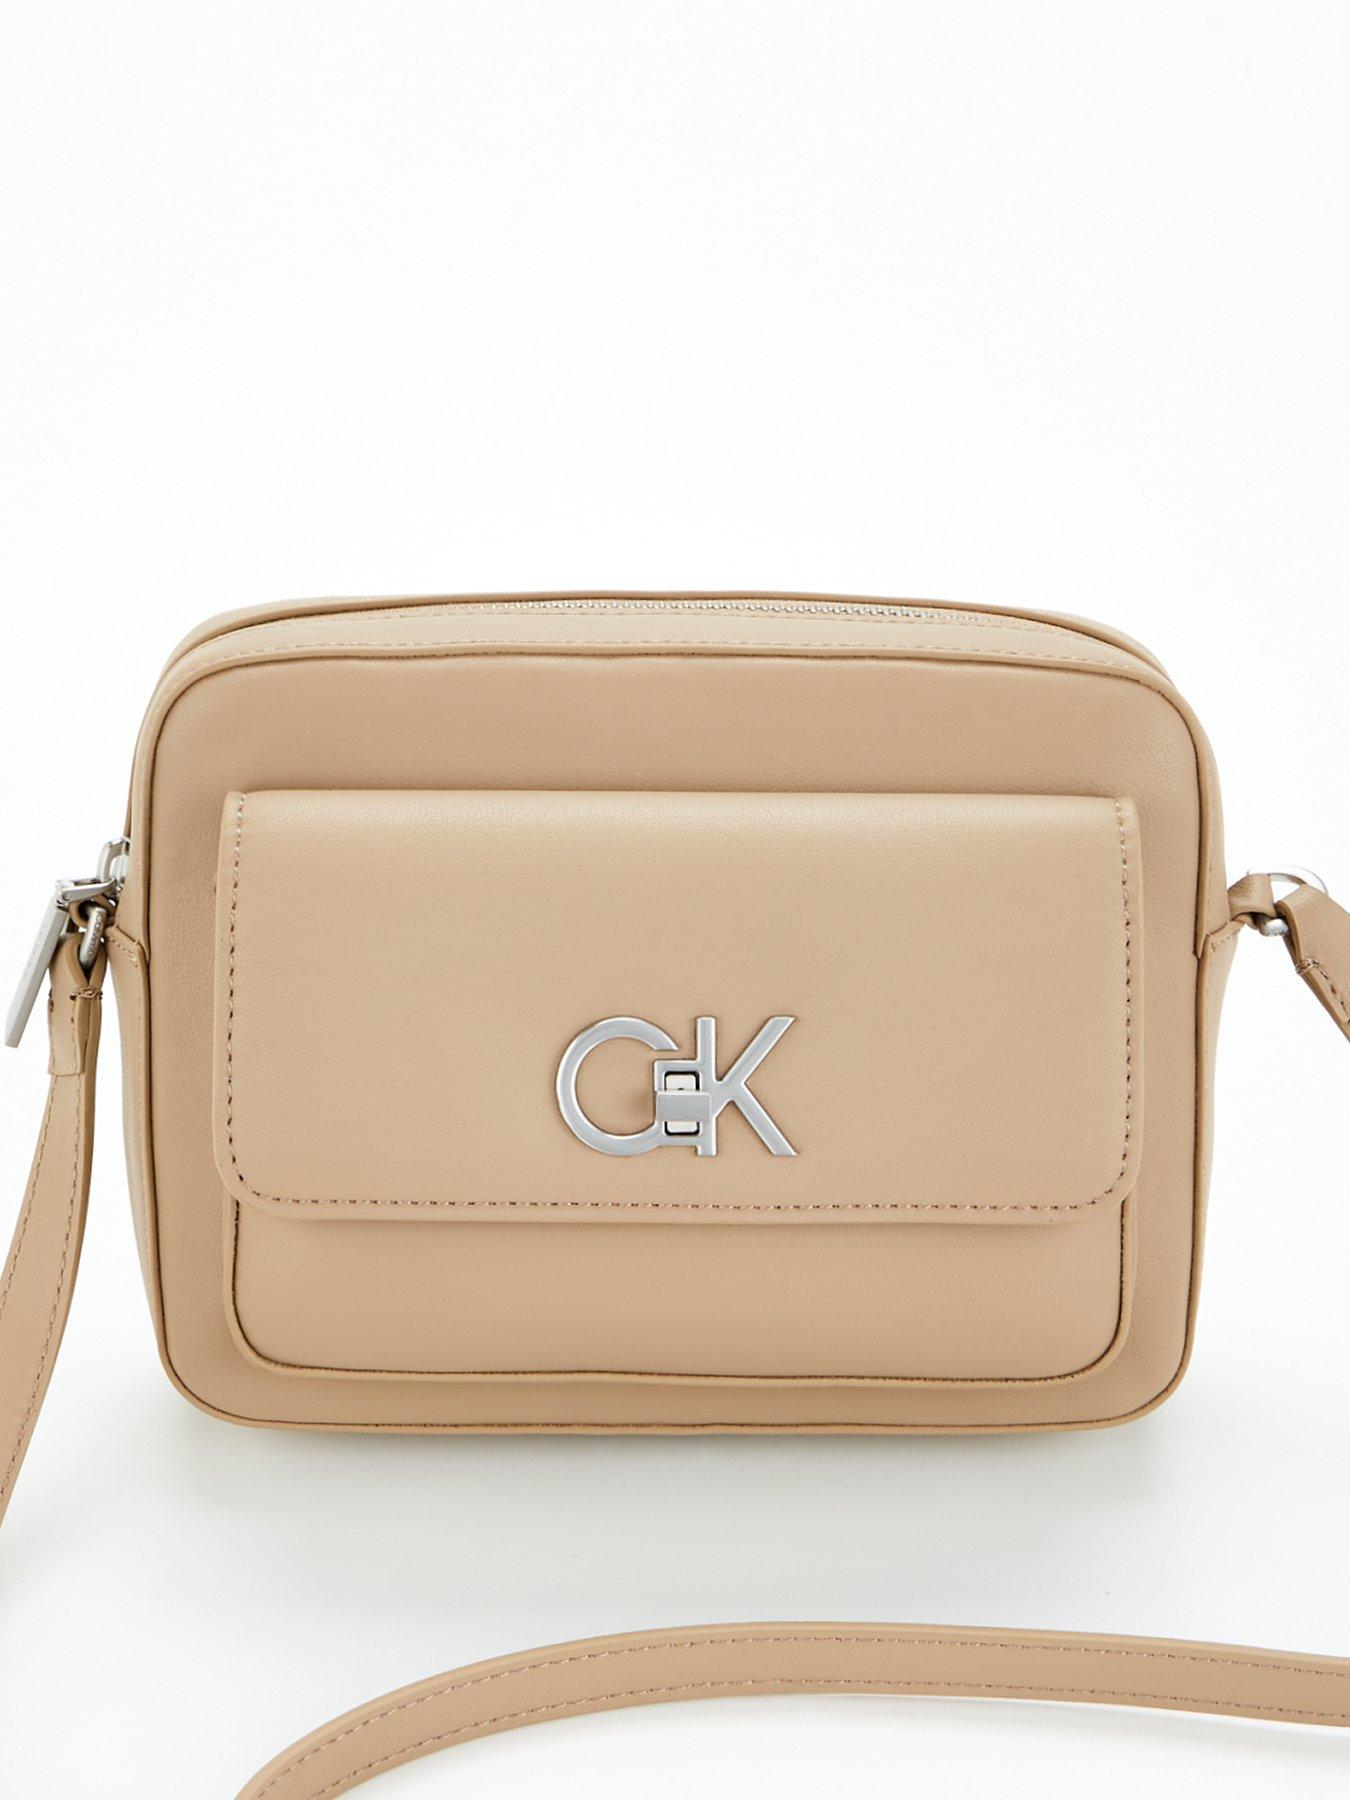 Buy HH&X Designer Handbag for Women - Stylish PU Leather Hand Bag - White  at Amazon.in